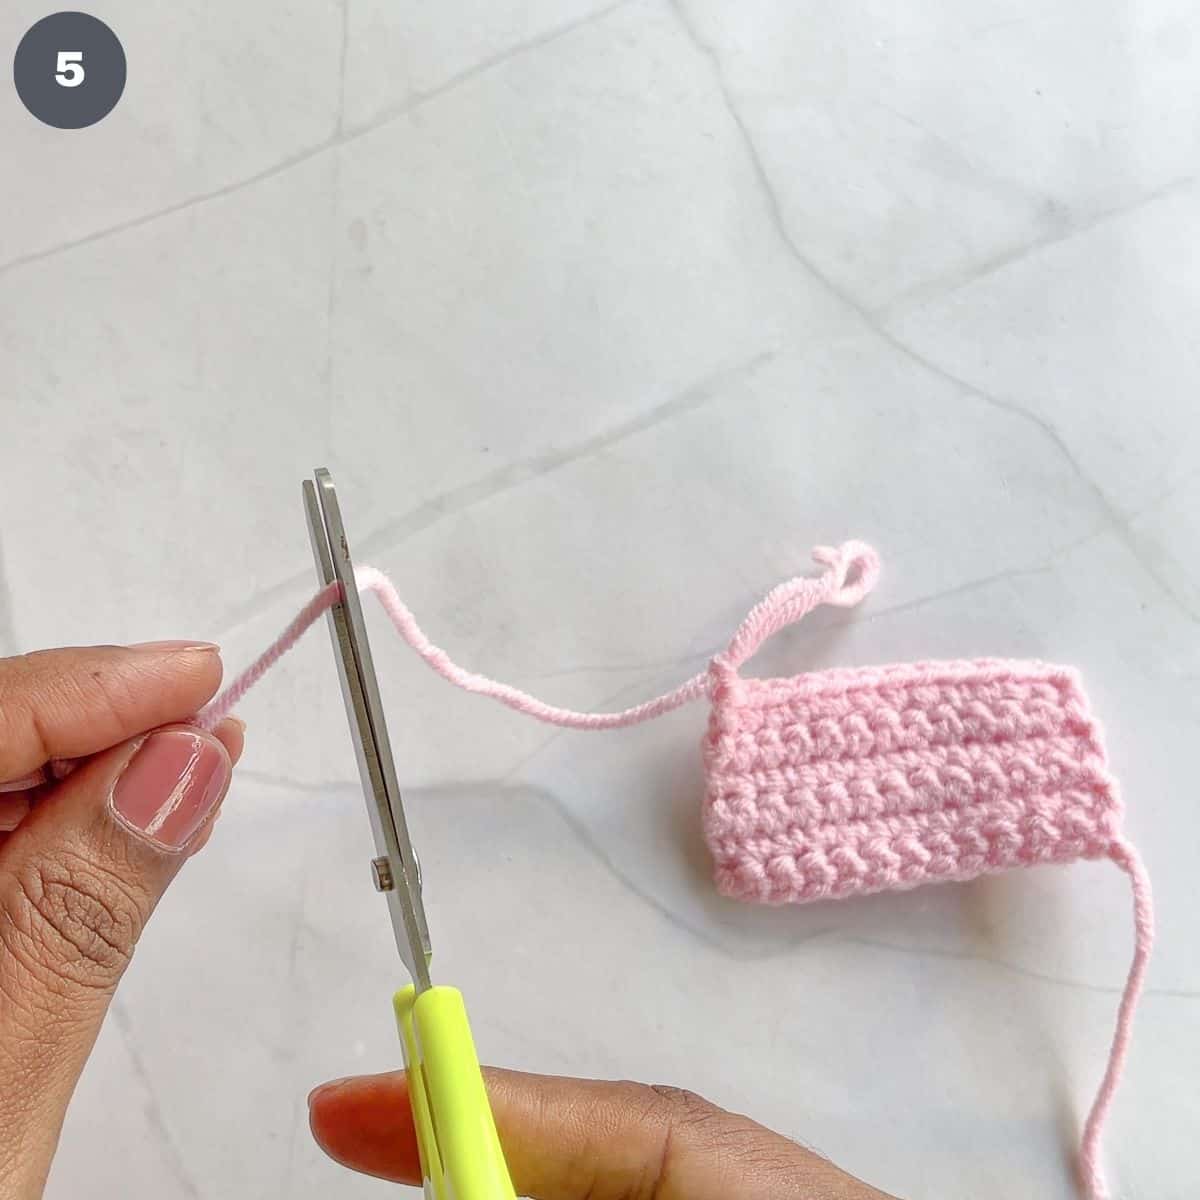 Cutting pink yarn with scissors.